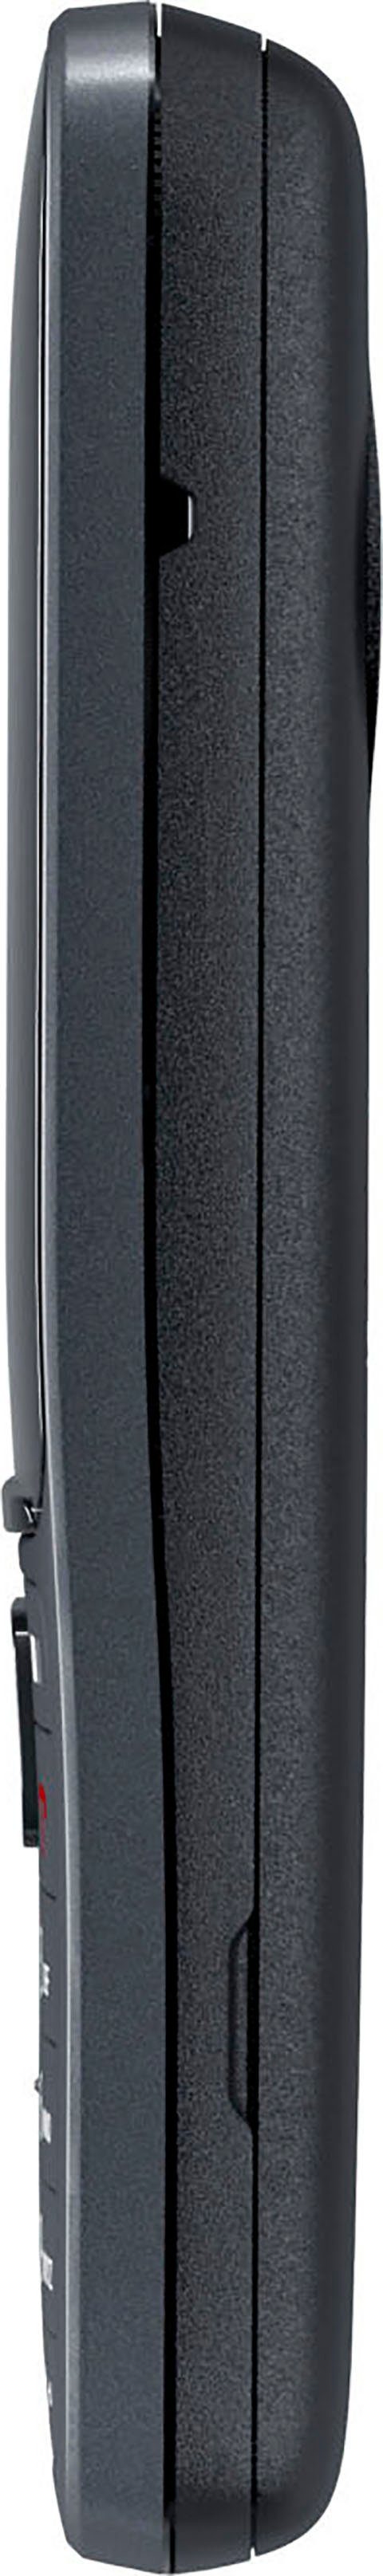 Telekom DECT Handset (Bluetooth) elmeg Festnetztelefon D142